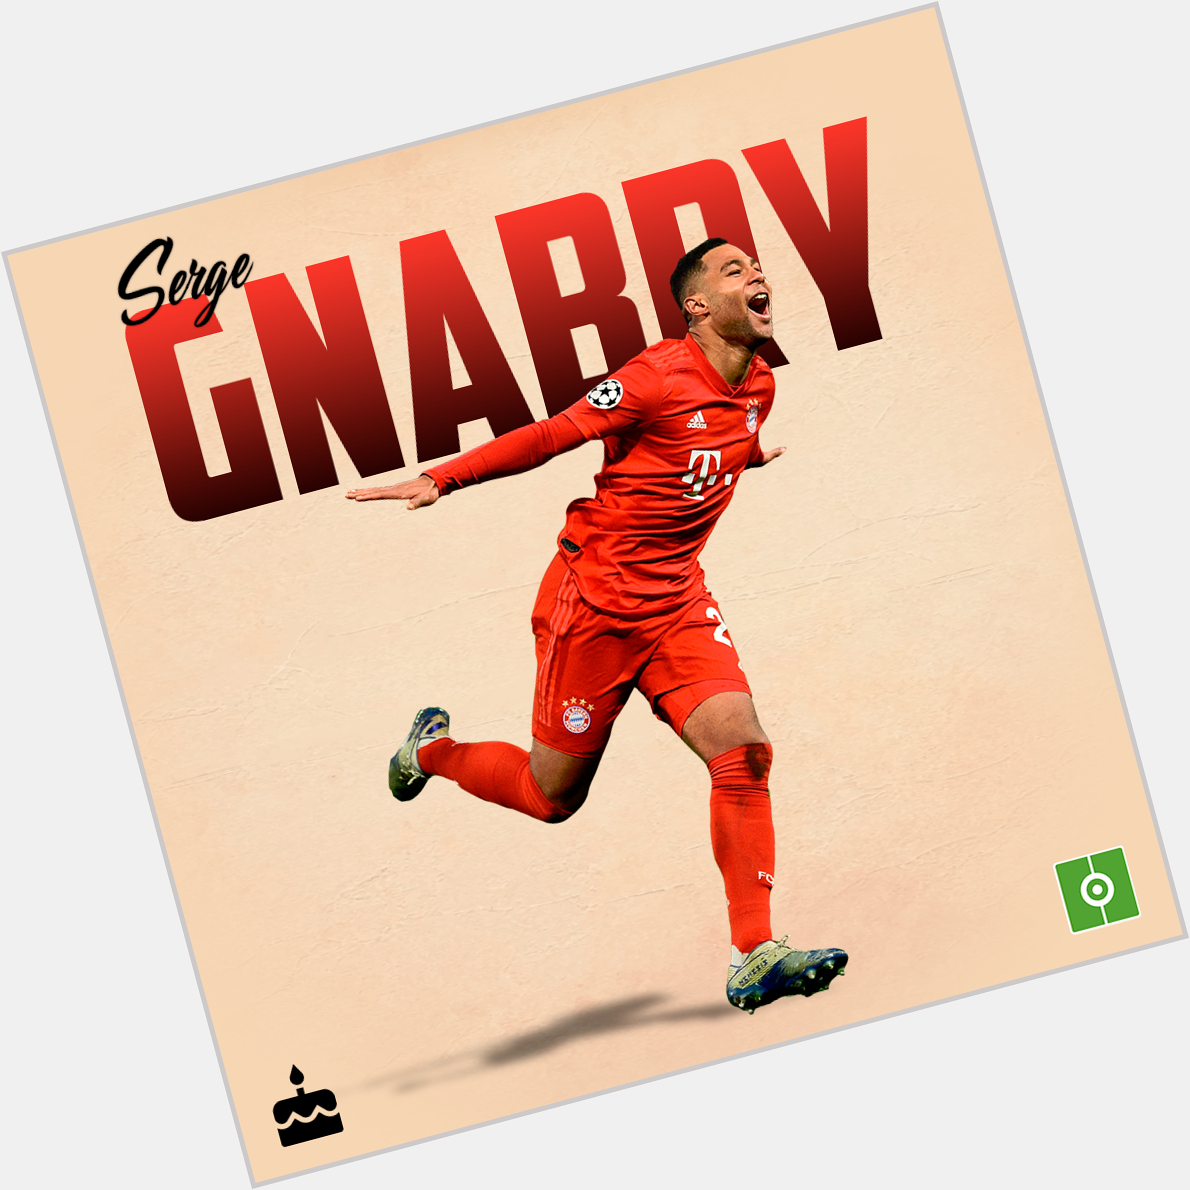 Happy Birthday, Serge Gnabry! 

The Bayern star turns 24 today   